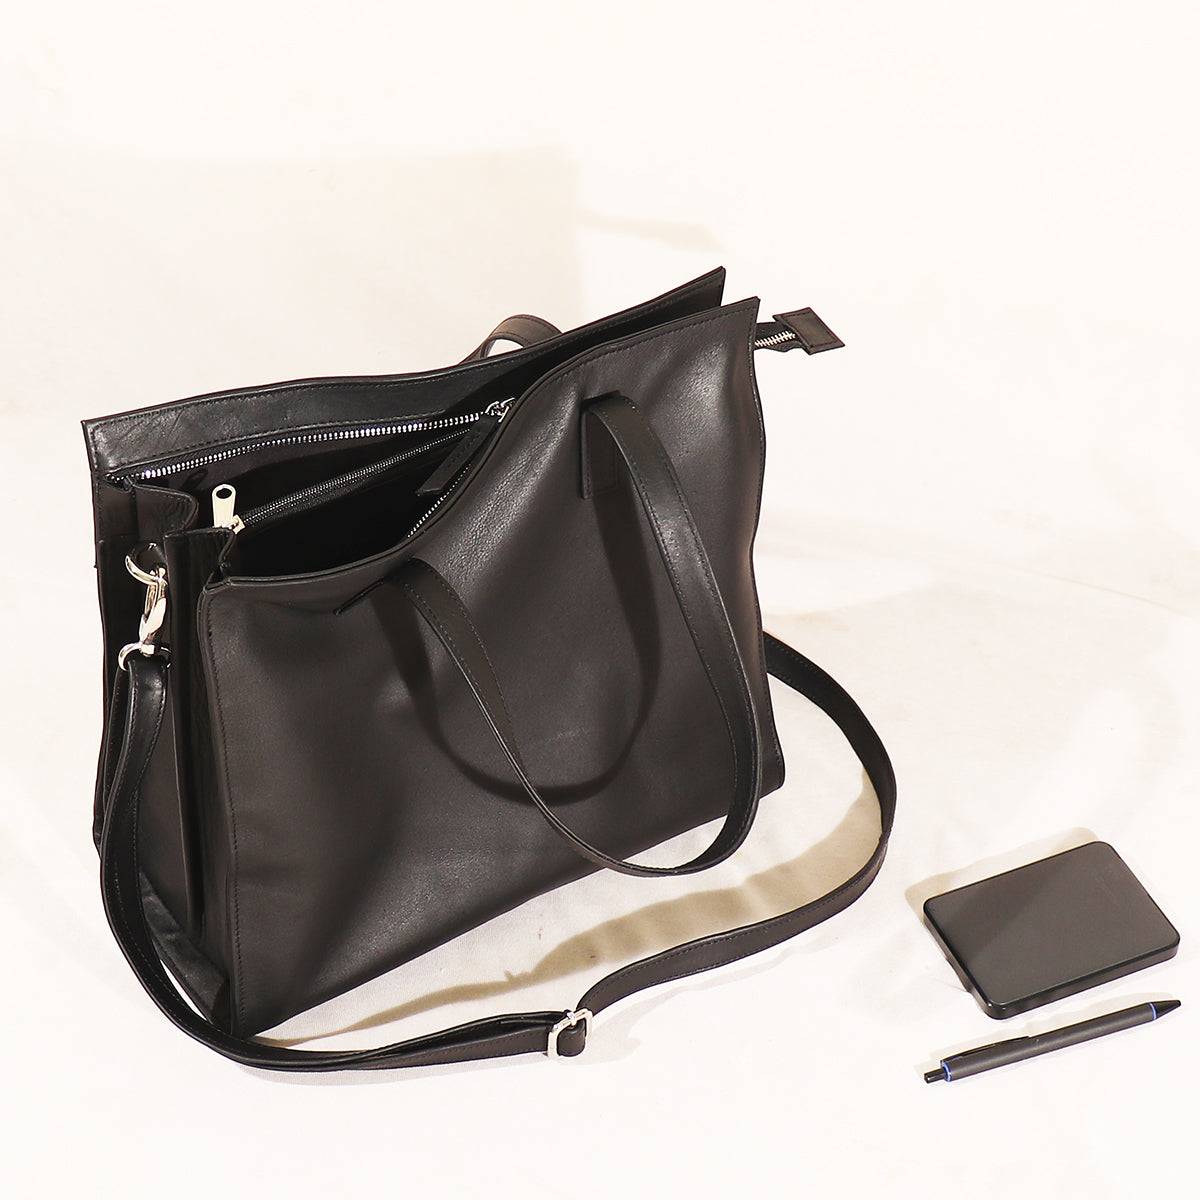 Classic Soft Leather Handbag for Women - Black